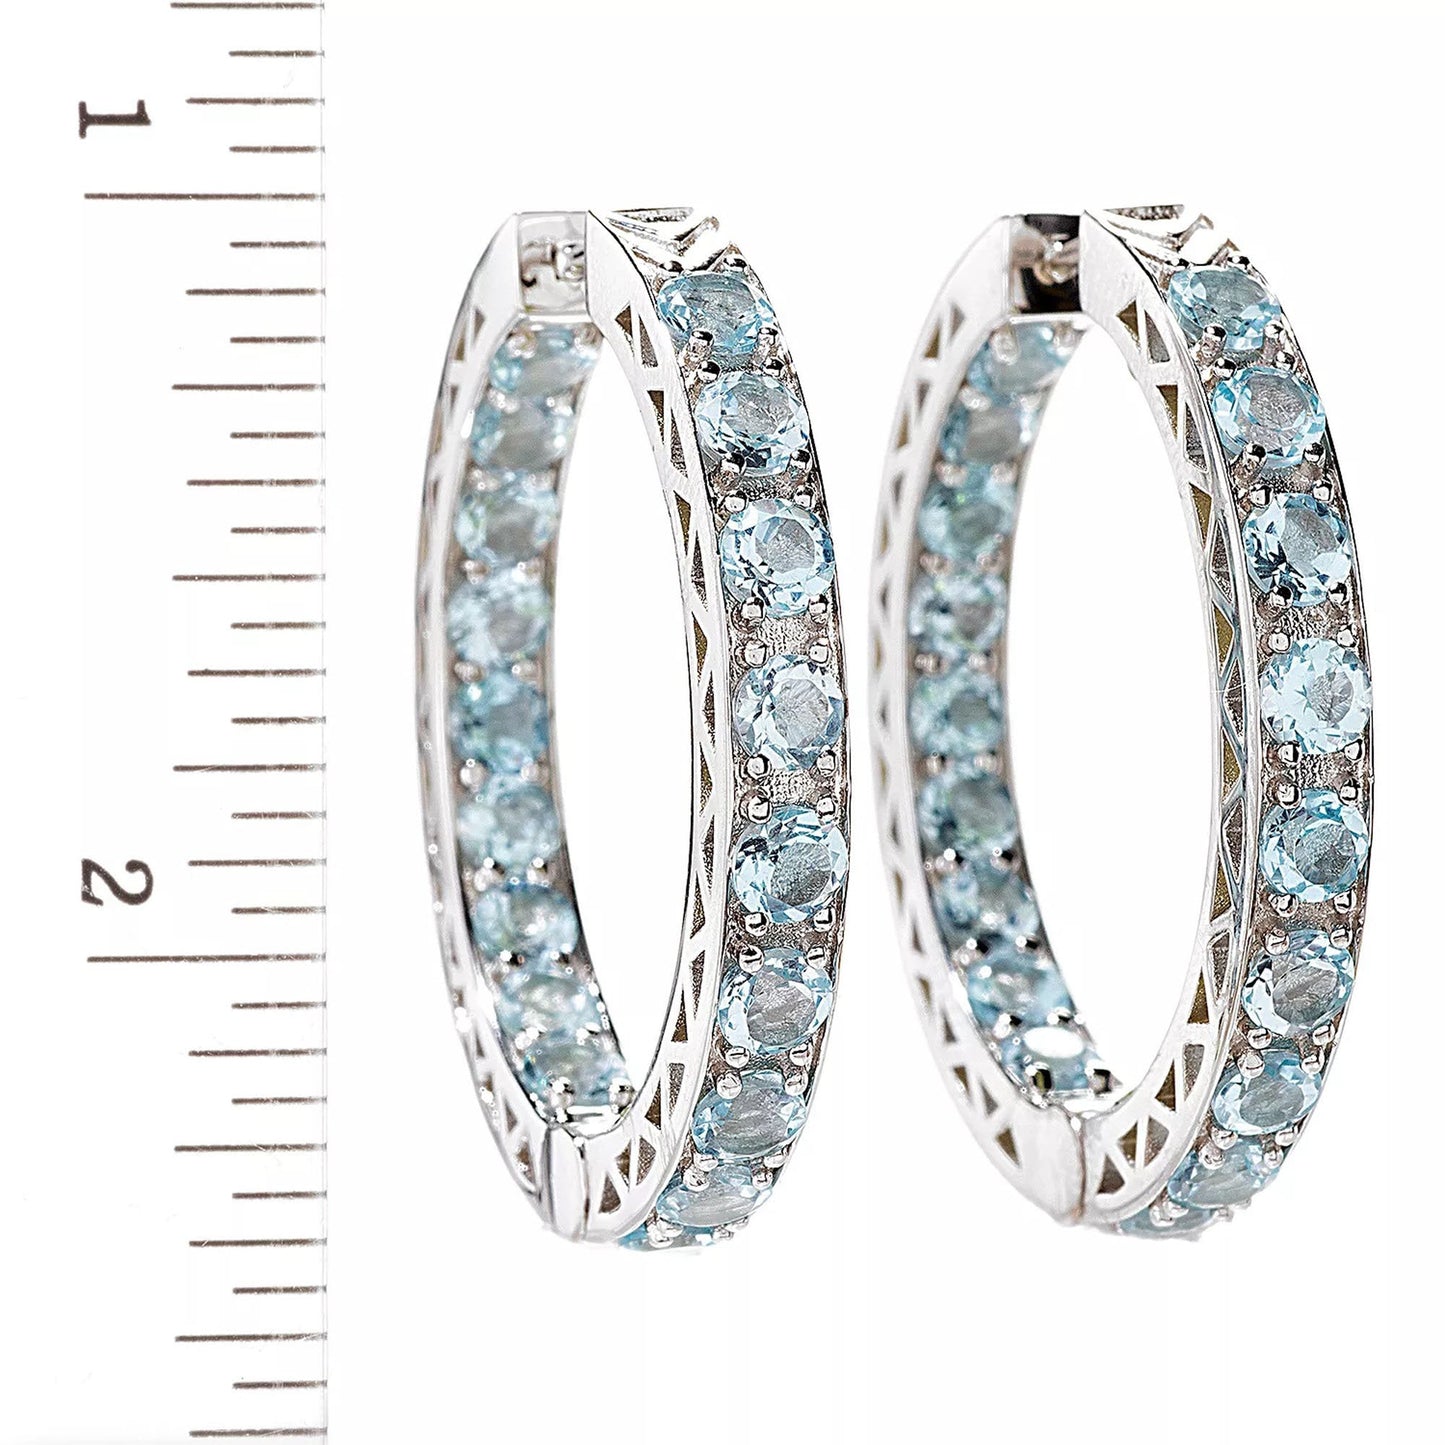 Natural Pink Amethyst Gemstone Earrings, 925 Sterling Silver Hoop Earrings, Everyday Jewelry, Anniversary Gift, Gift For Her